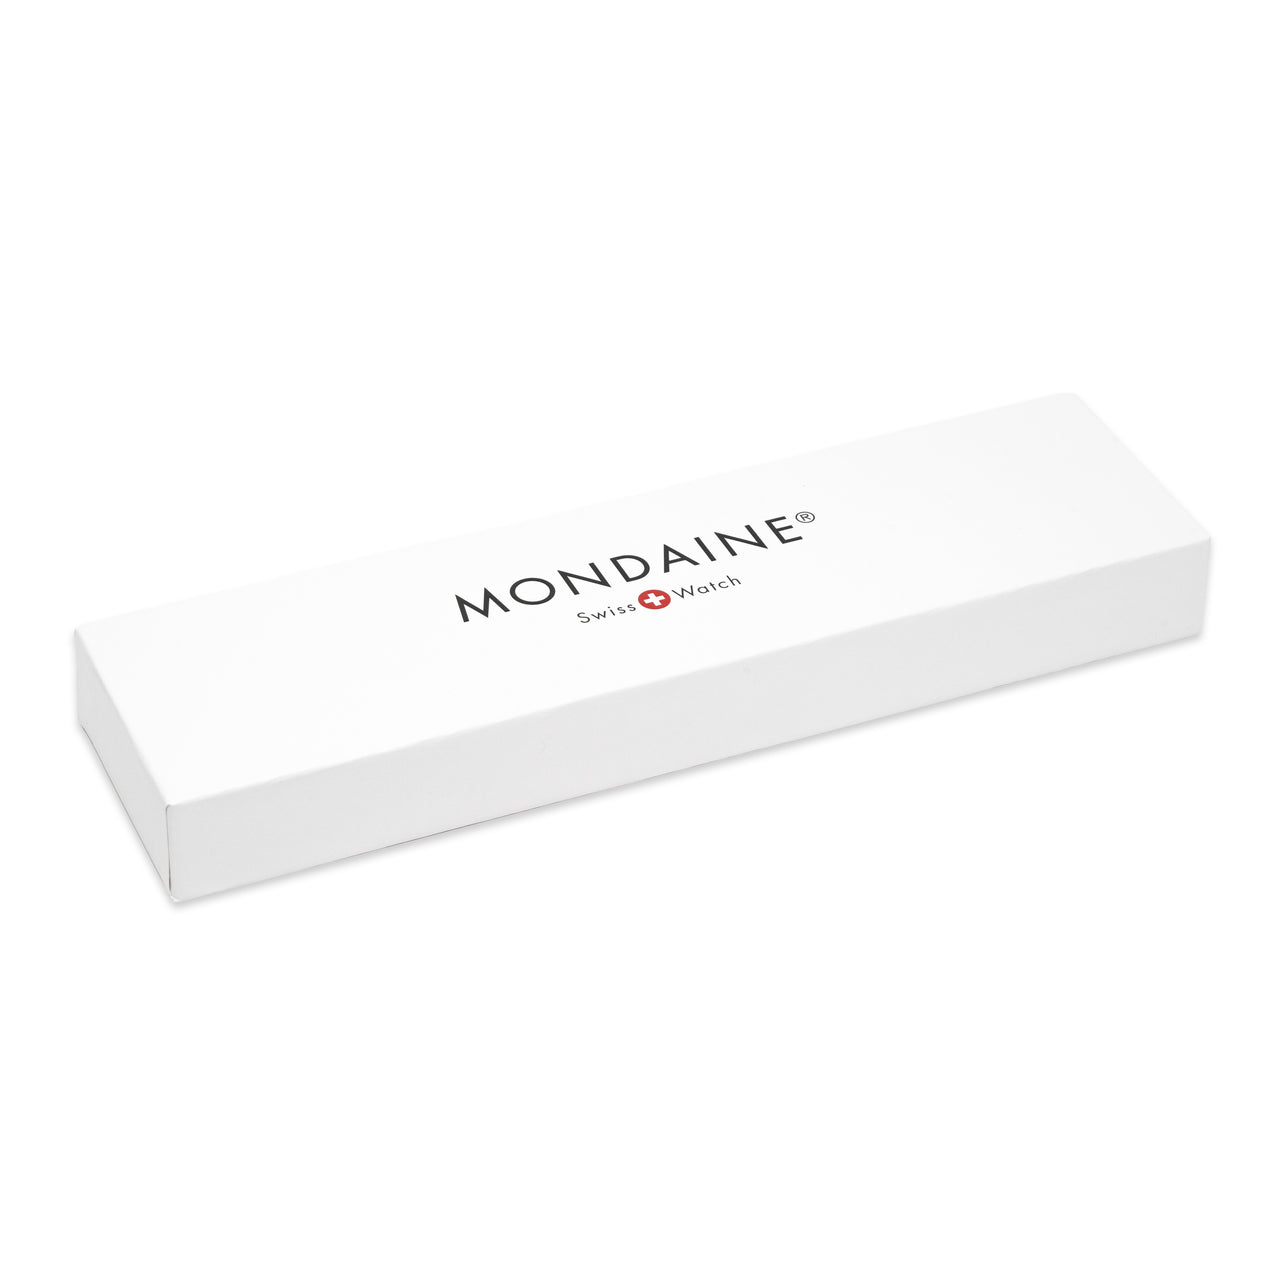 Mondaine Watch Essence Black MS1.41120.RBSET